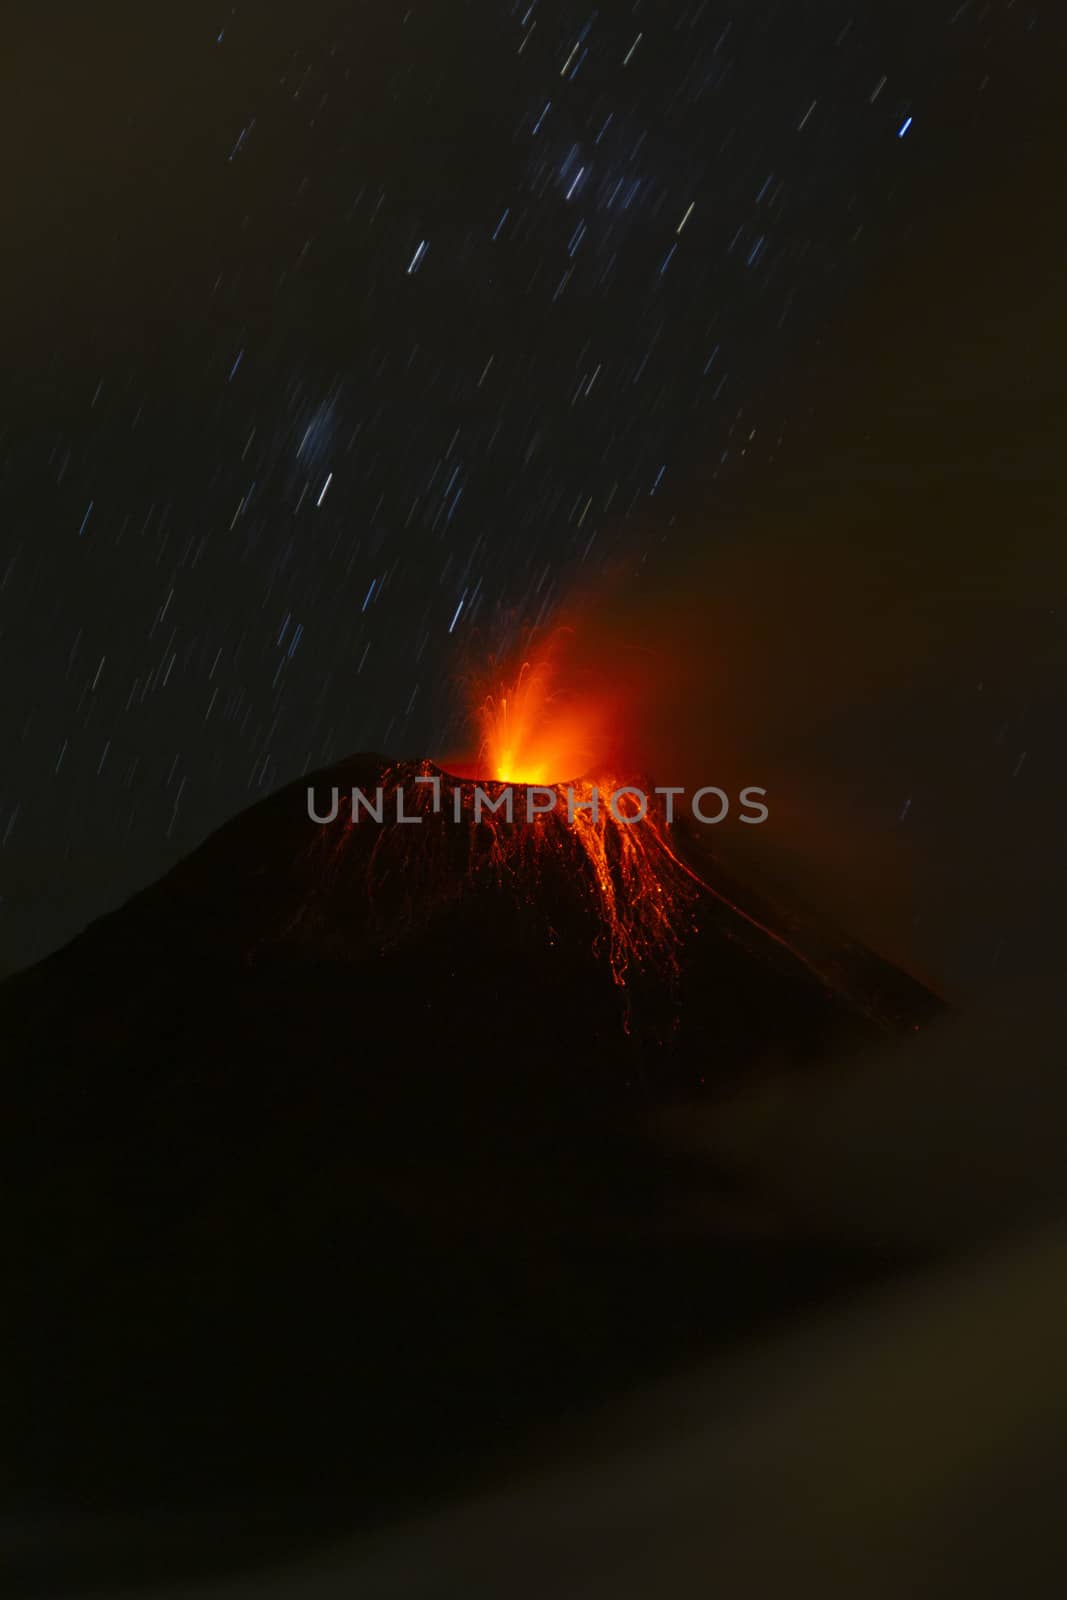 ECUADOR, Huambalo: The Tungurahua volcano spews fumes and lava on March 2, 2016 in Huambalo, Ecuador, affecting neighboring parishes with ashfall. 